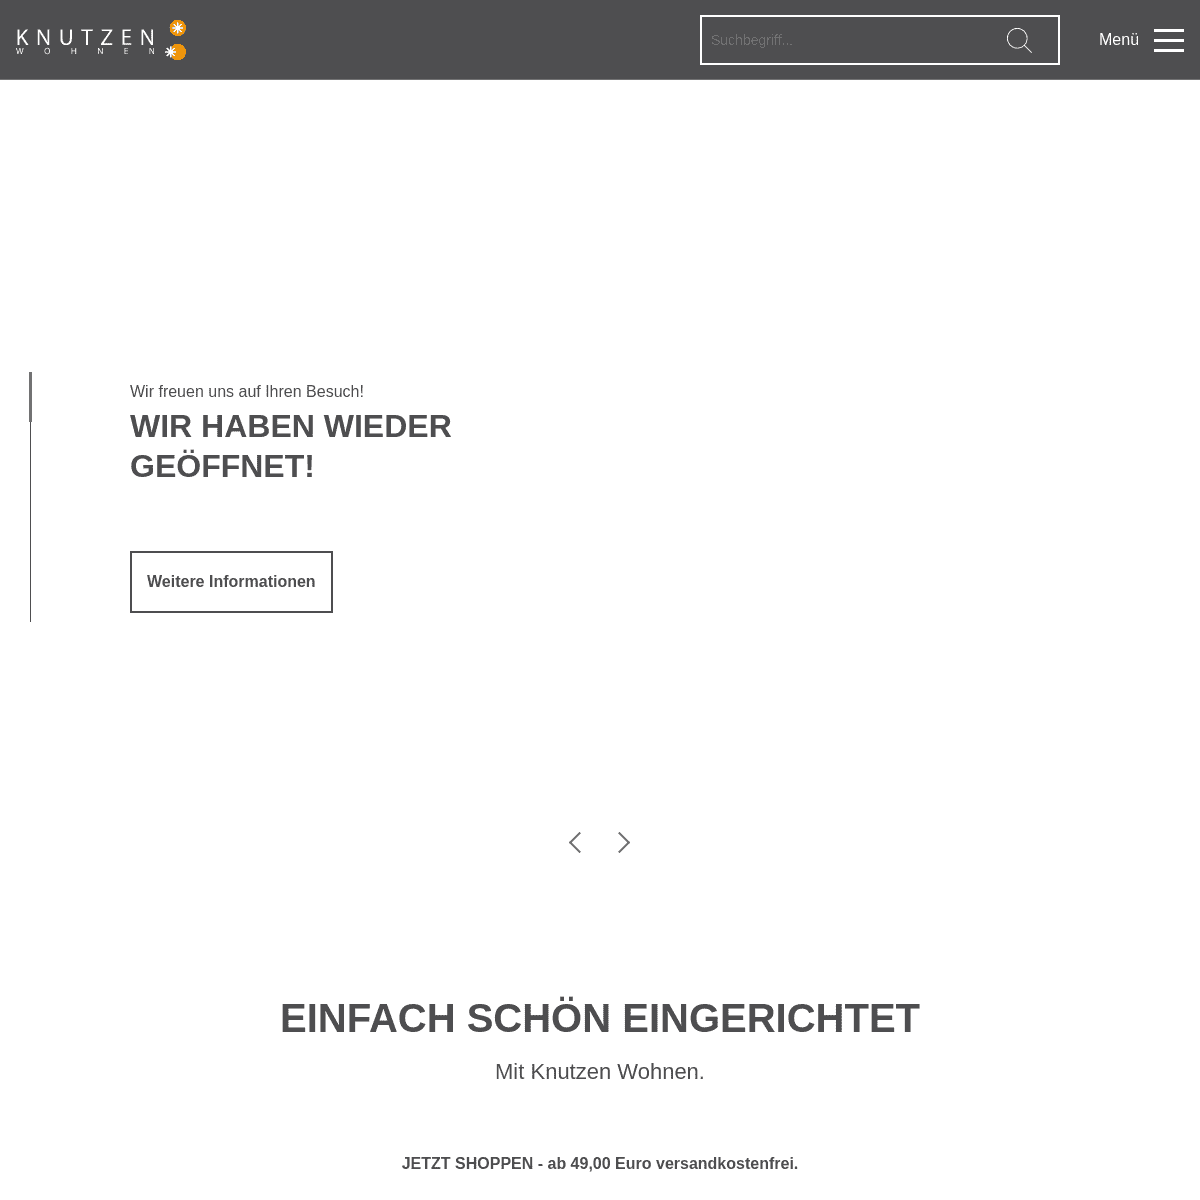 A complete backup of https://knutzen.de